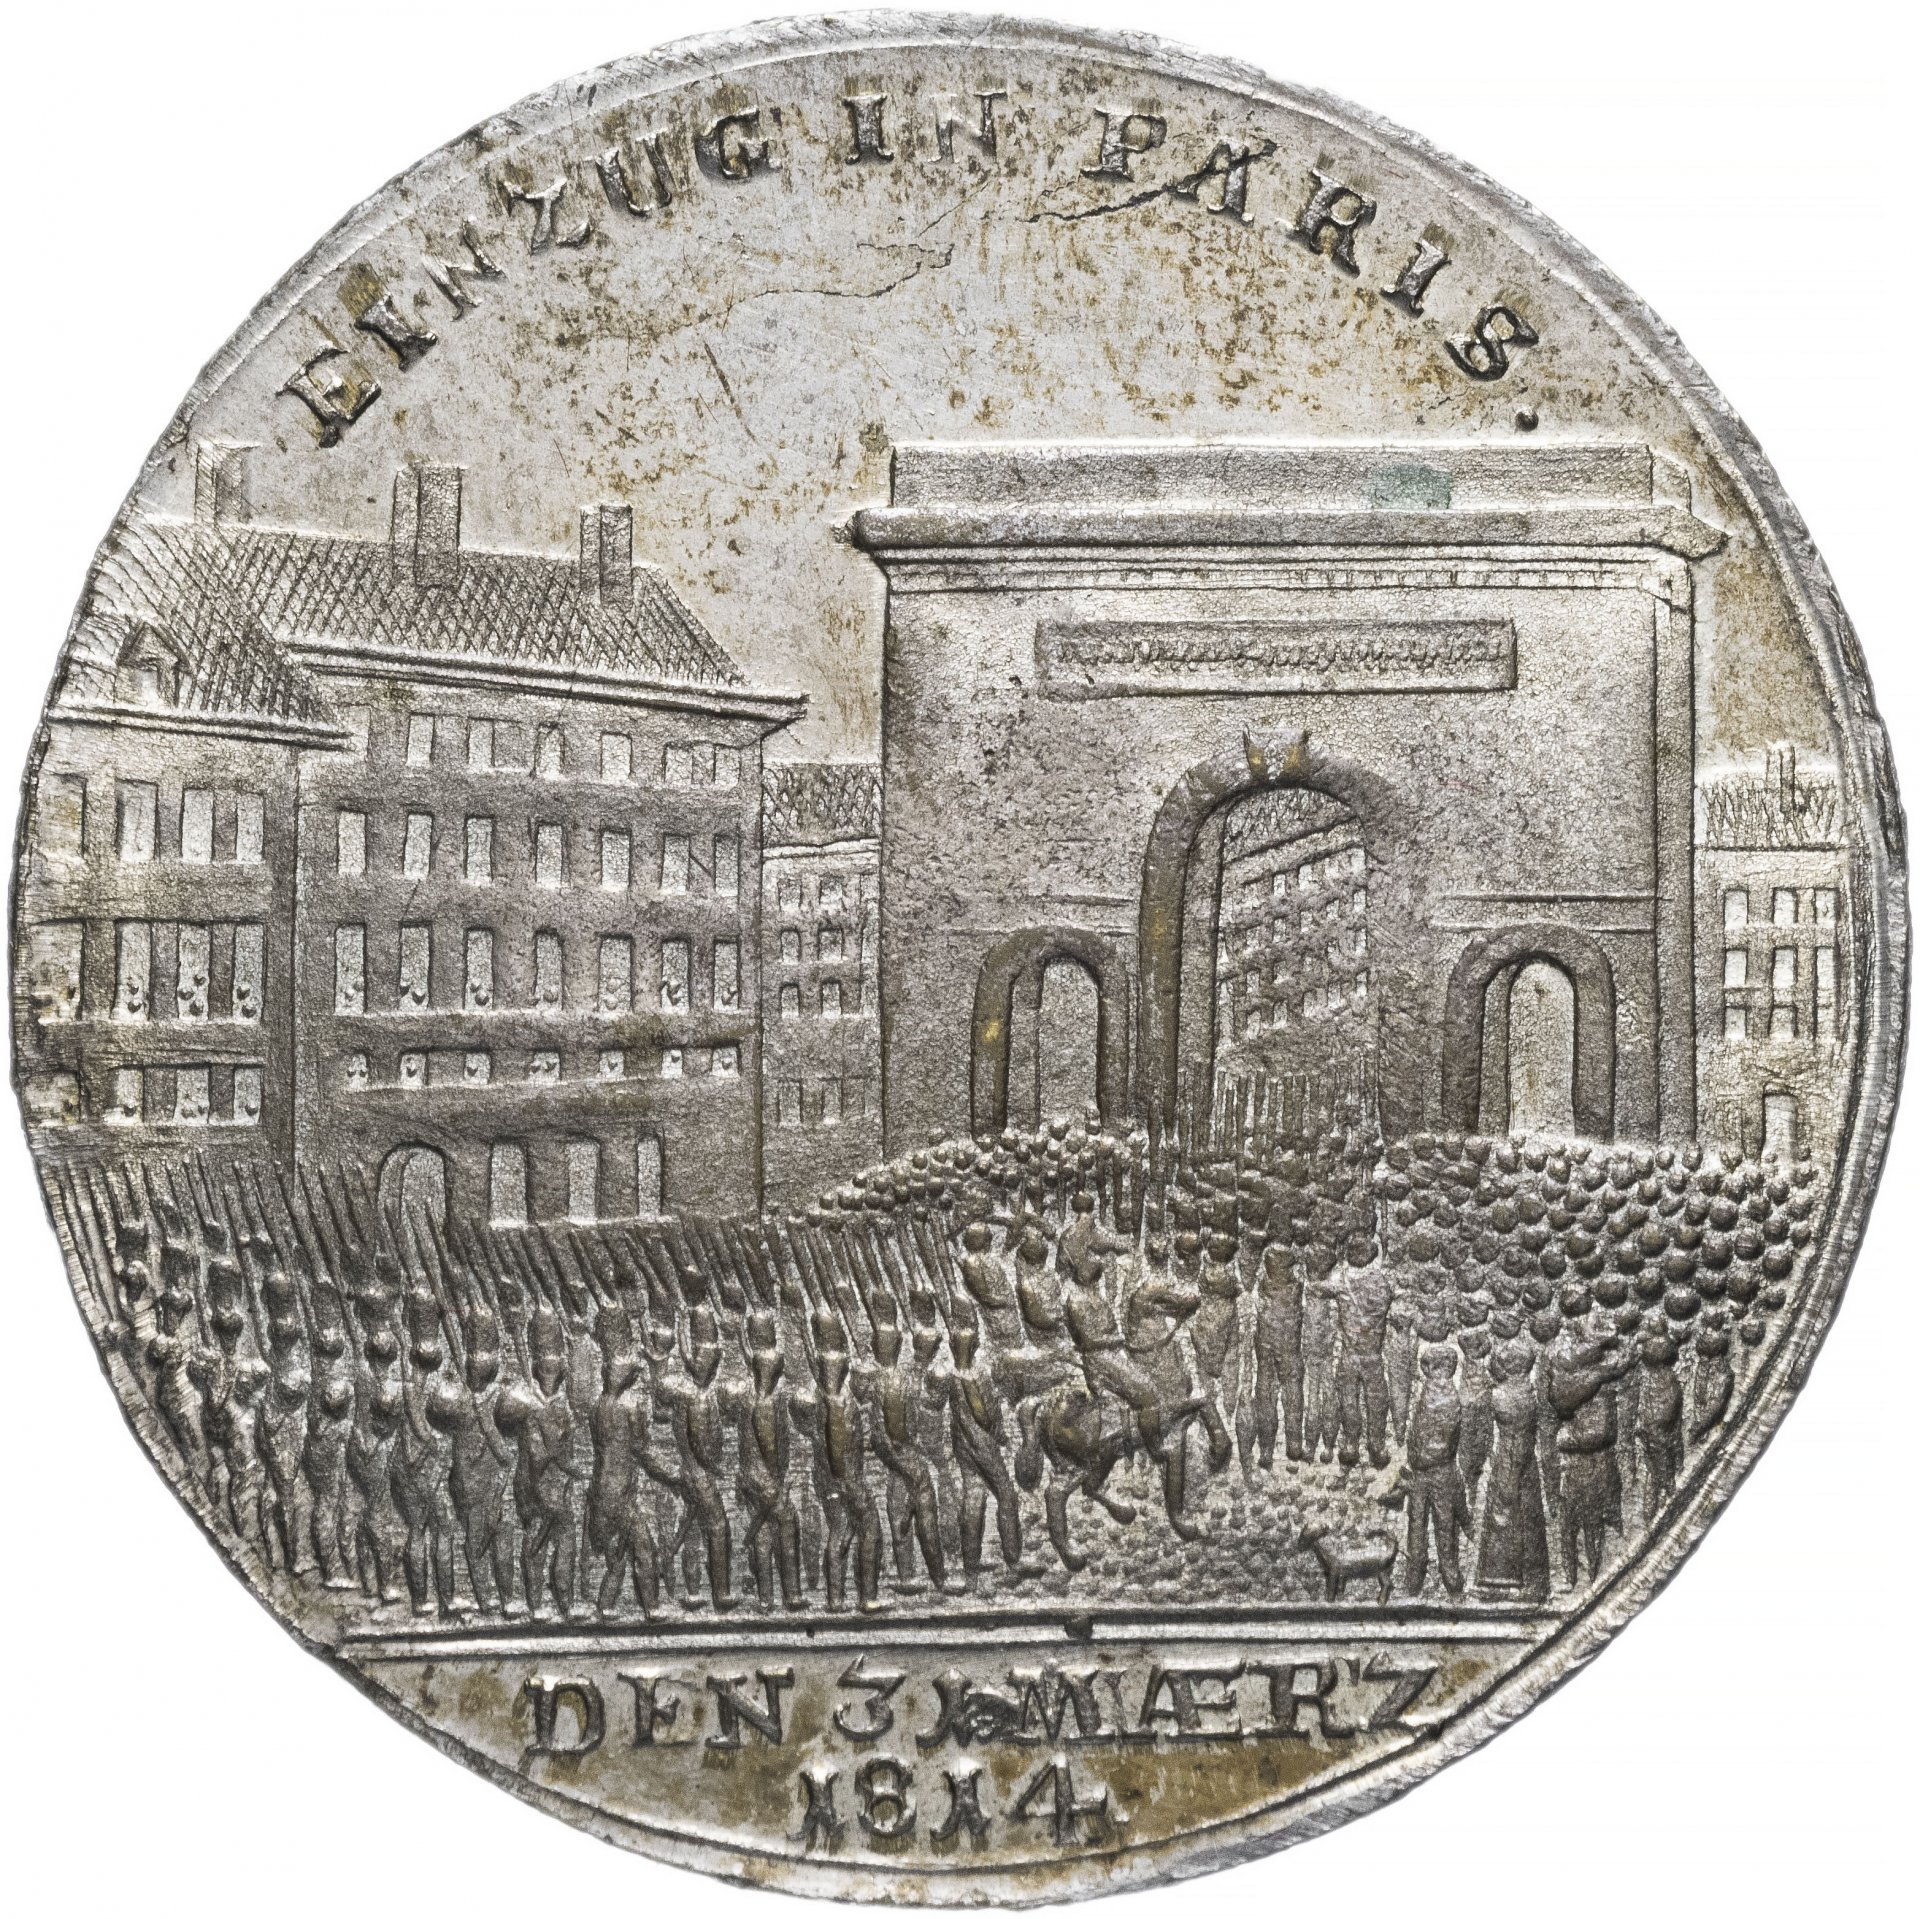 5 рублей взятие парижа. Взятие Парижа 1814. 31.03.1814 Взятие Парижа. Жетон Нюрнберг Амстердам 1814 года.